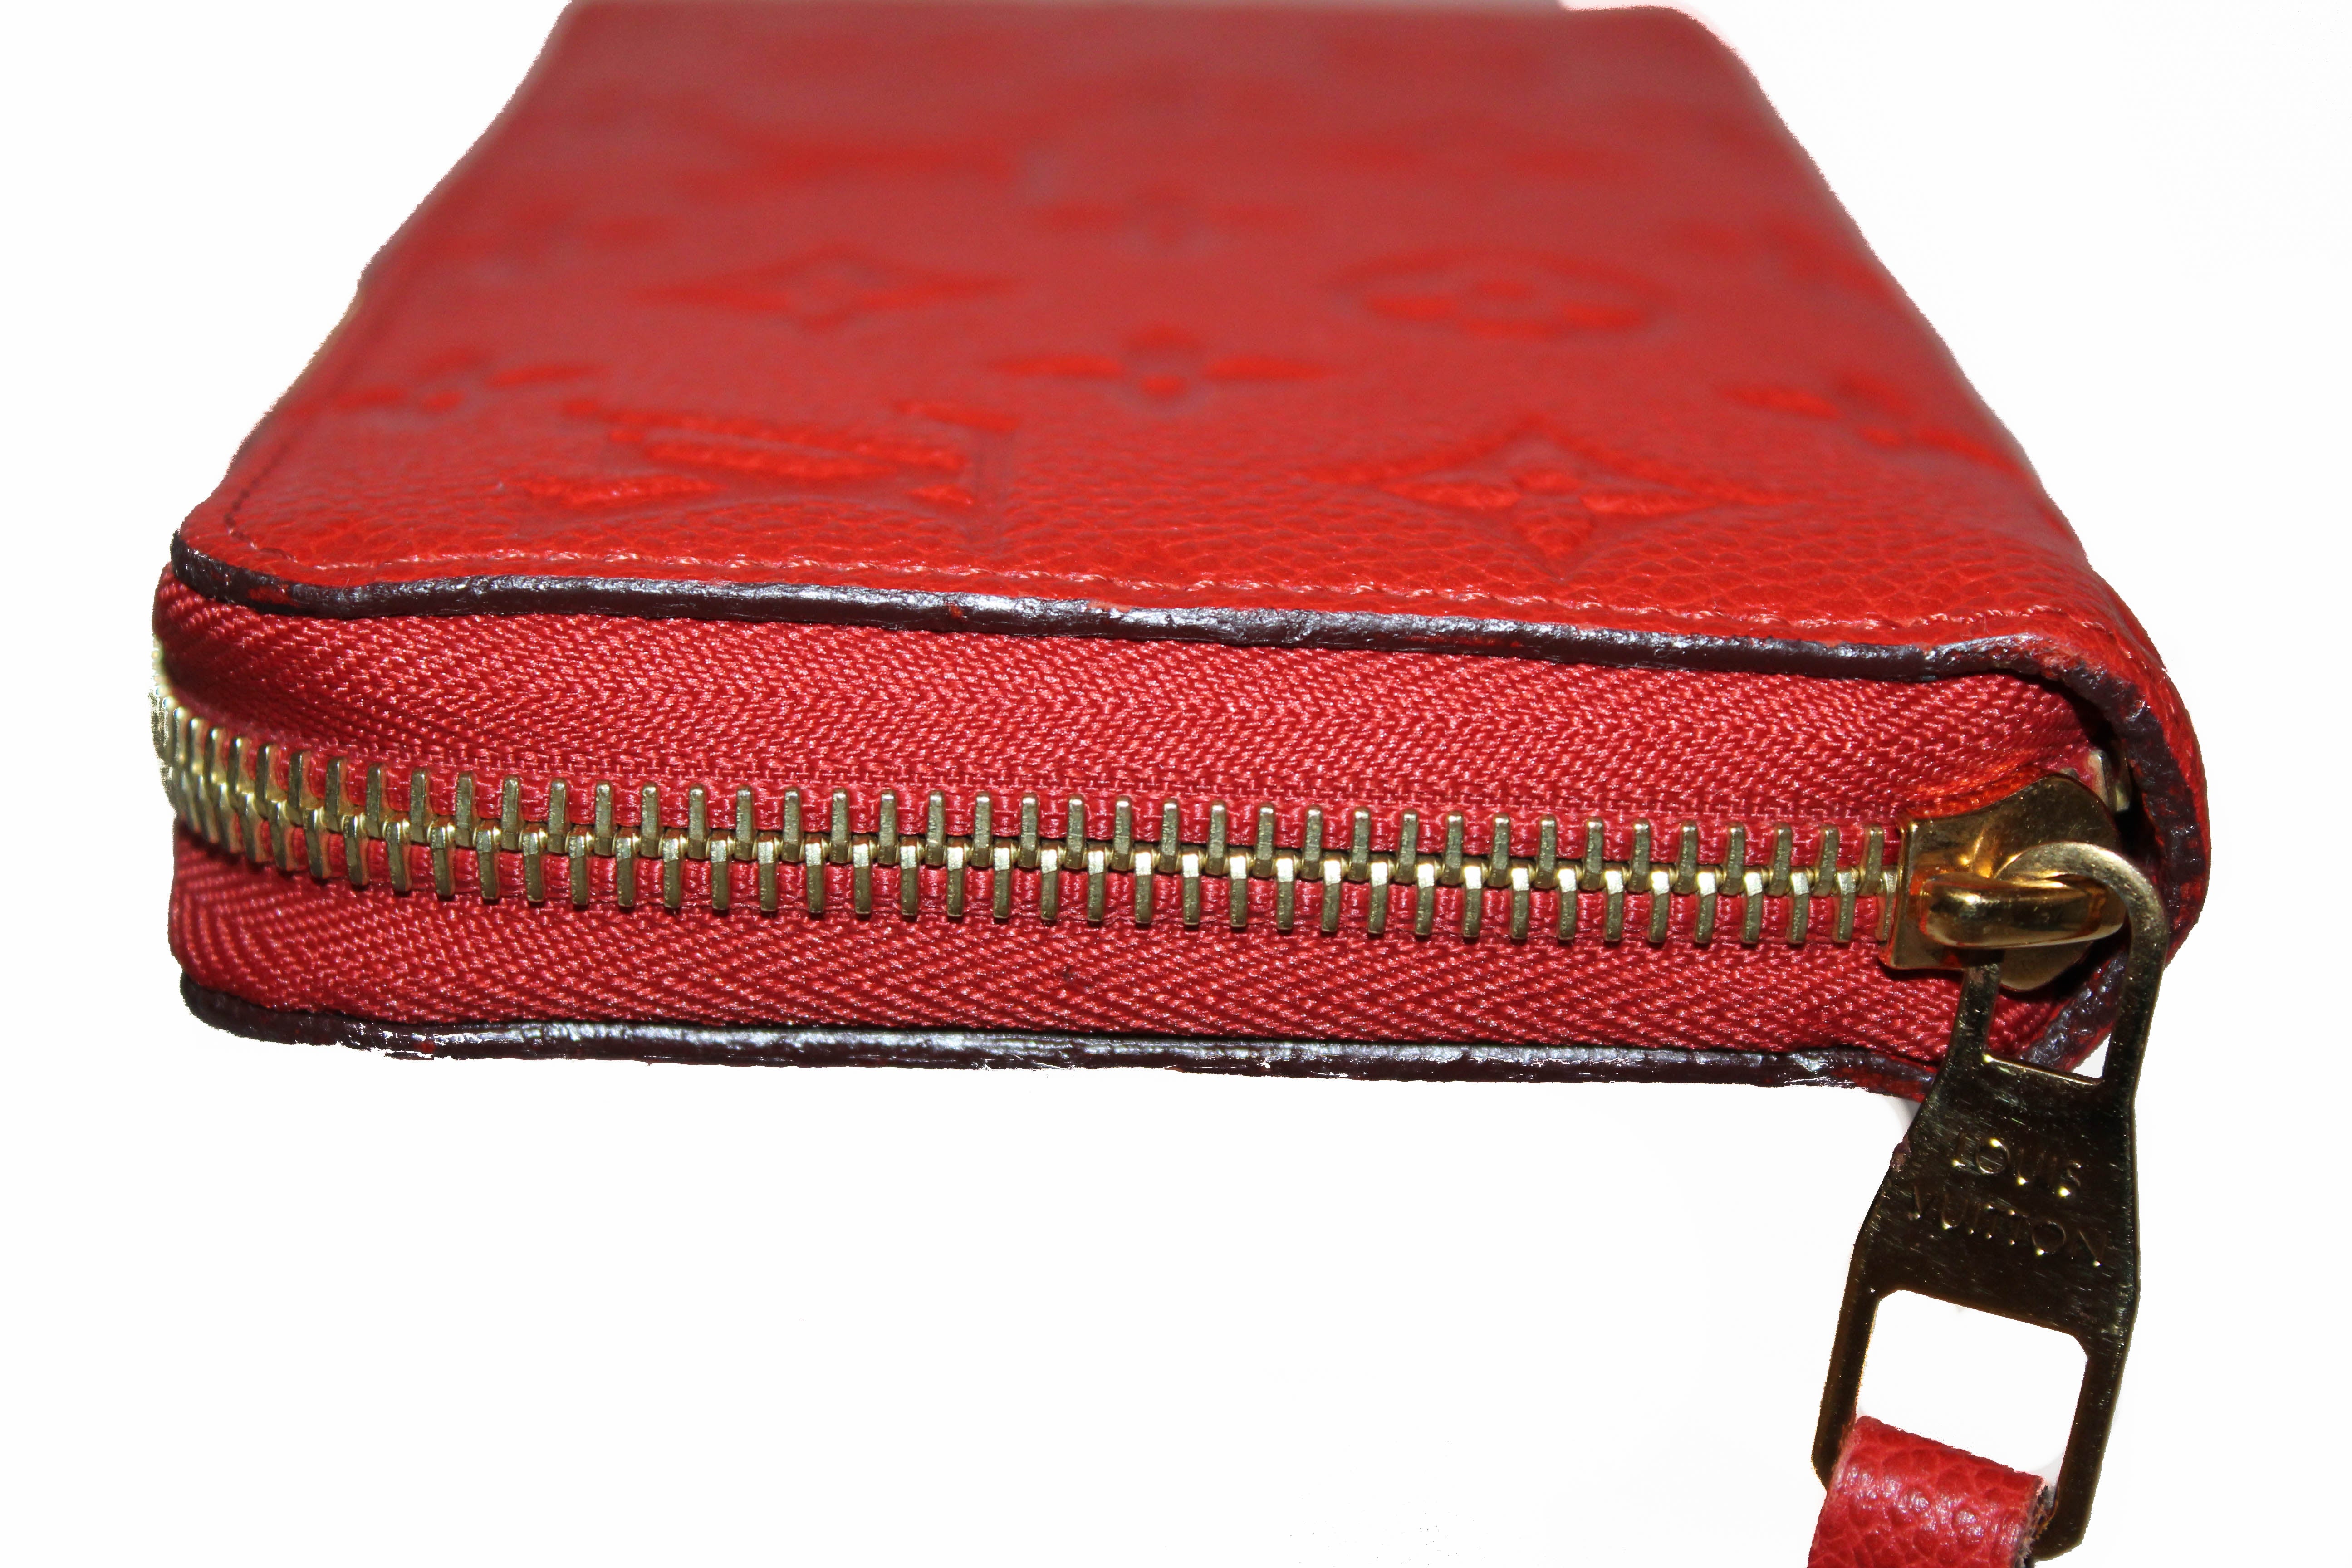 Louis Vuitton Red Monogram Empreinte Leather Zippy Wallet Louis